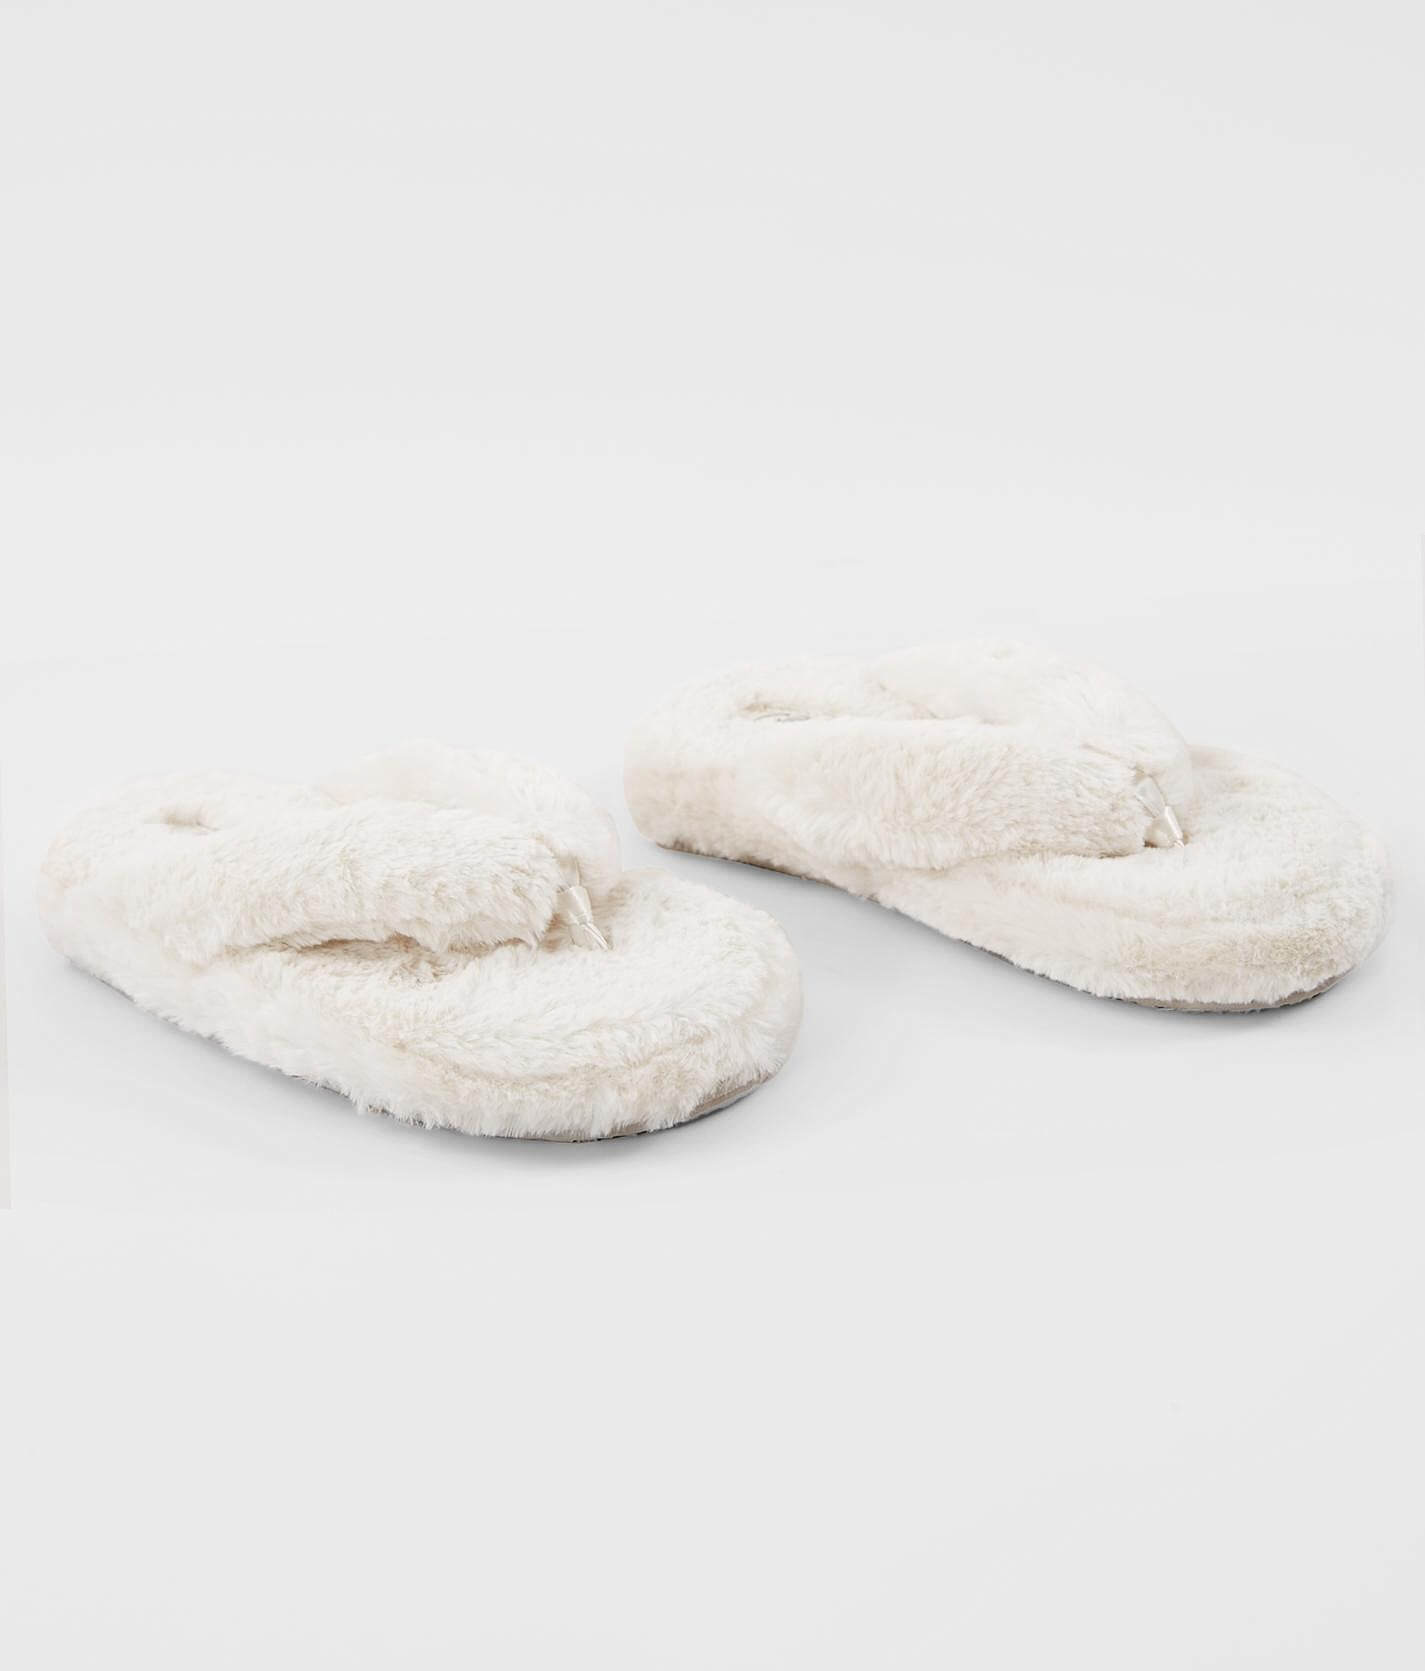 cobian slippers